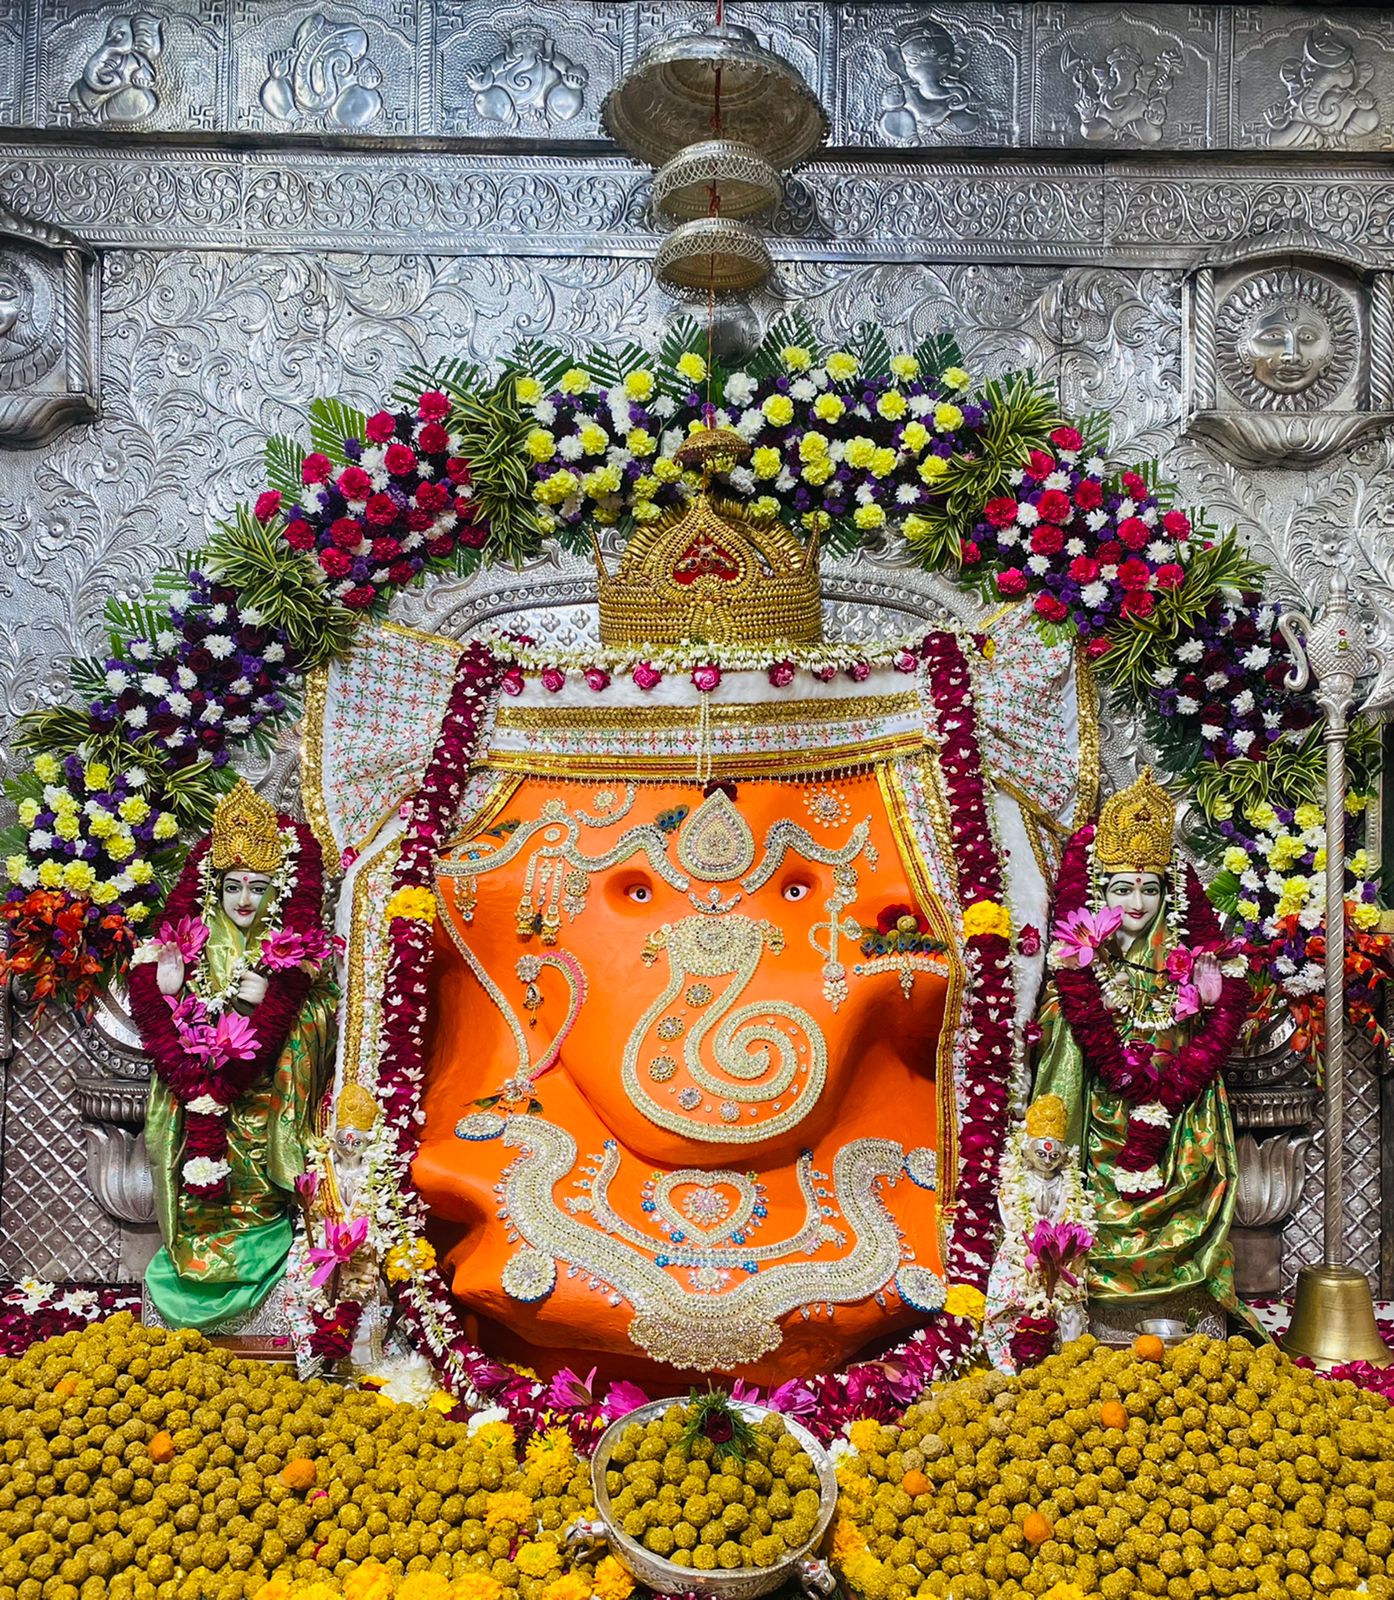 Khajrana Ganesh will wear jewelery worth three crores today